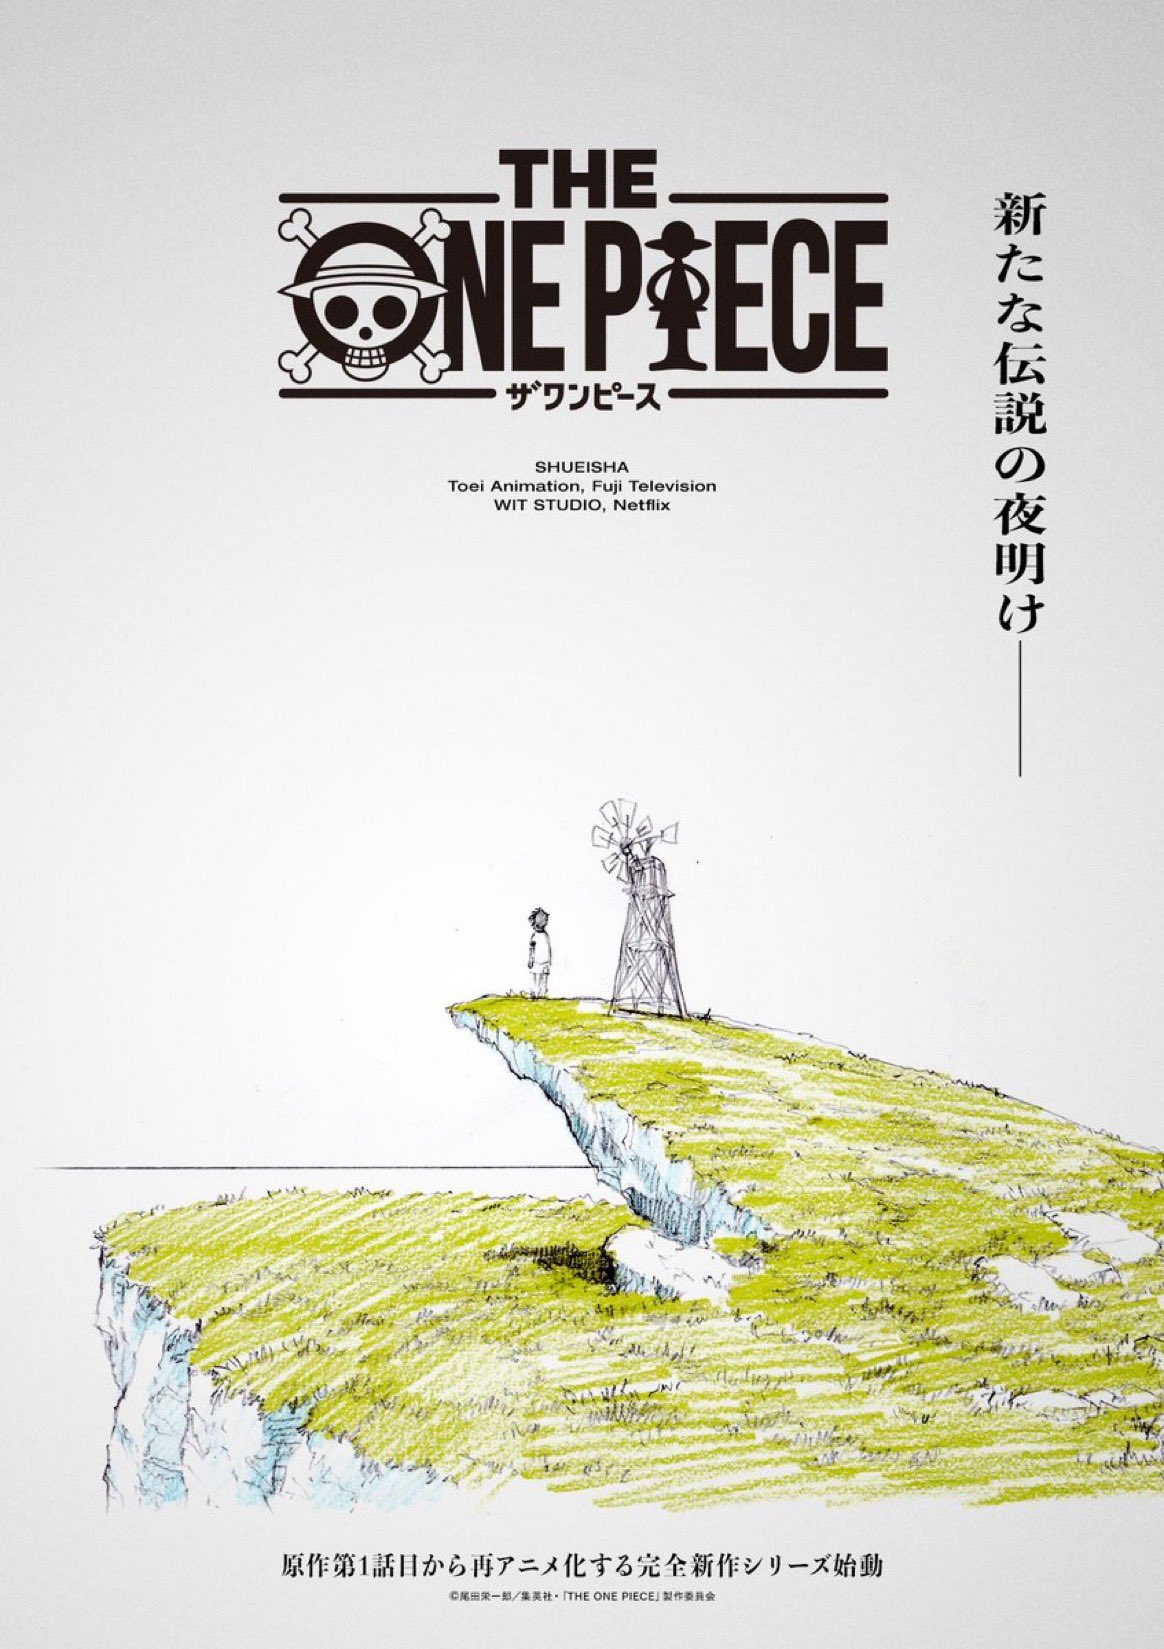 One Piece 1086: ¿Cuándo sale el nuevo capítulo del Manga de Eiichiro Oda?, Shonen Jump, MangaPlus